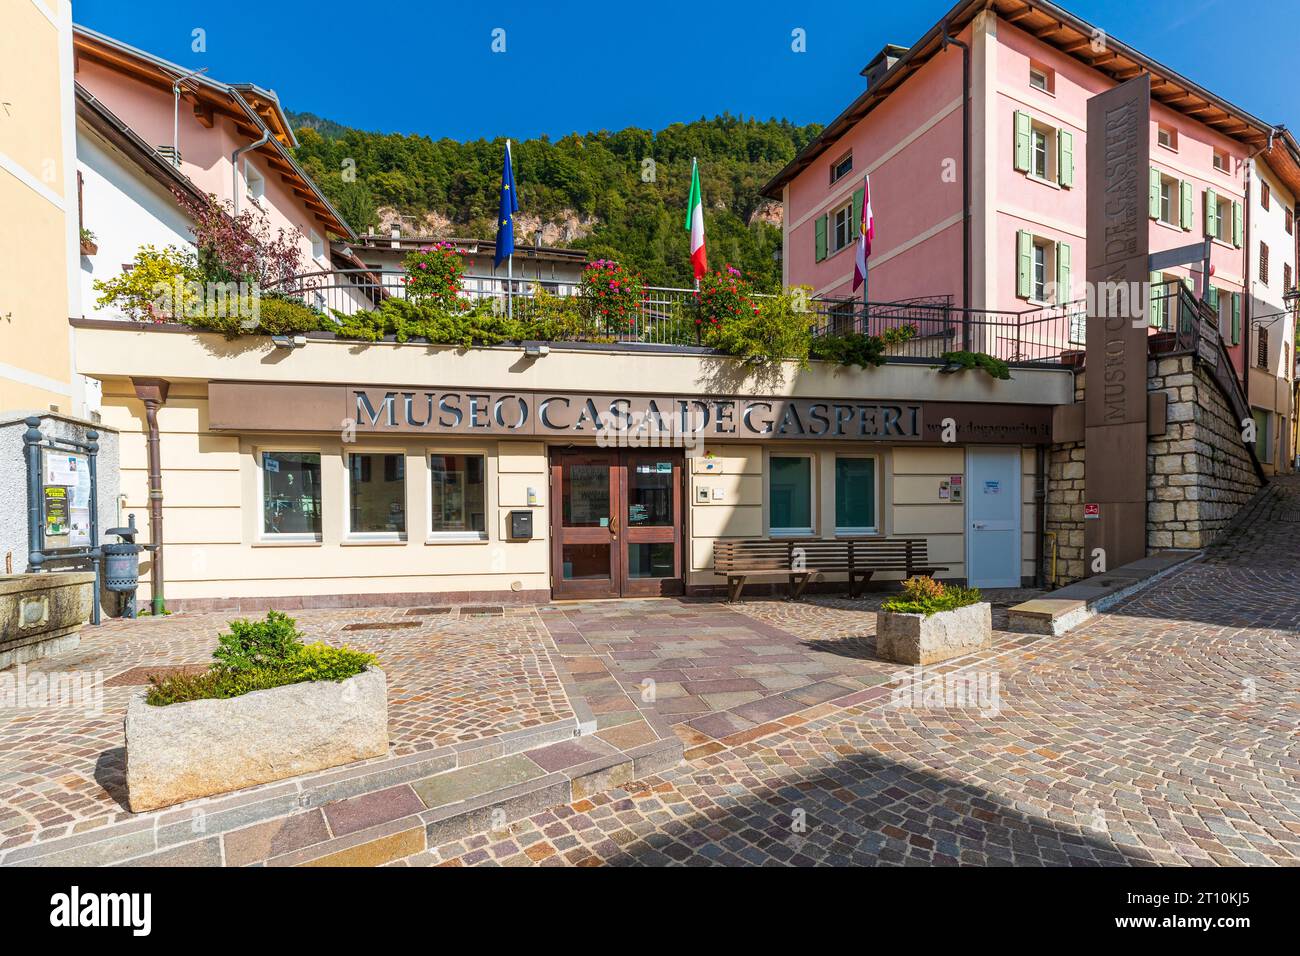 Italy Trentino Pieve Tesino / Museo Casa De Gasperi Stock Photo